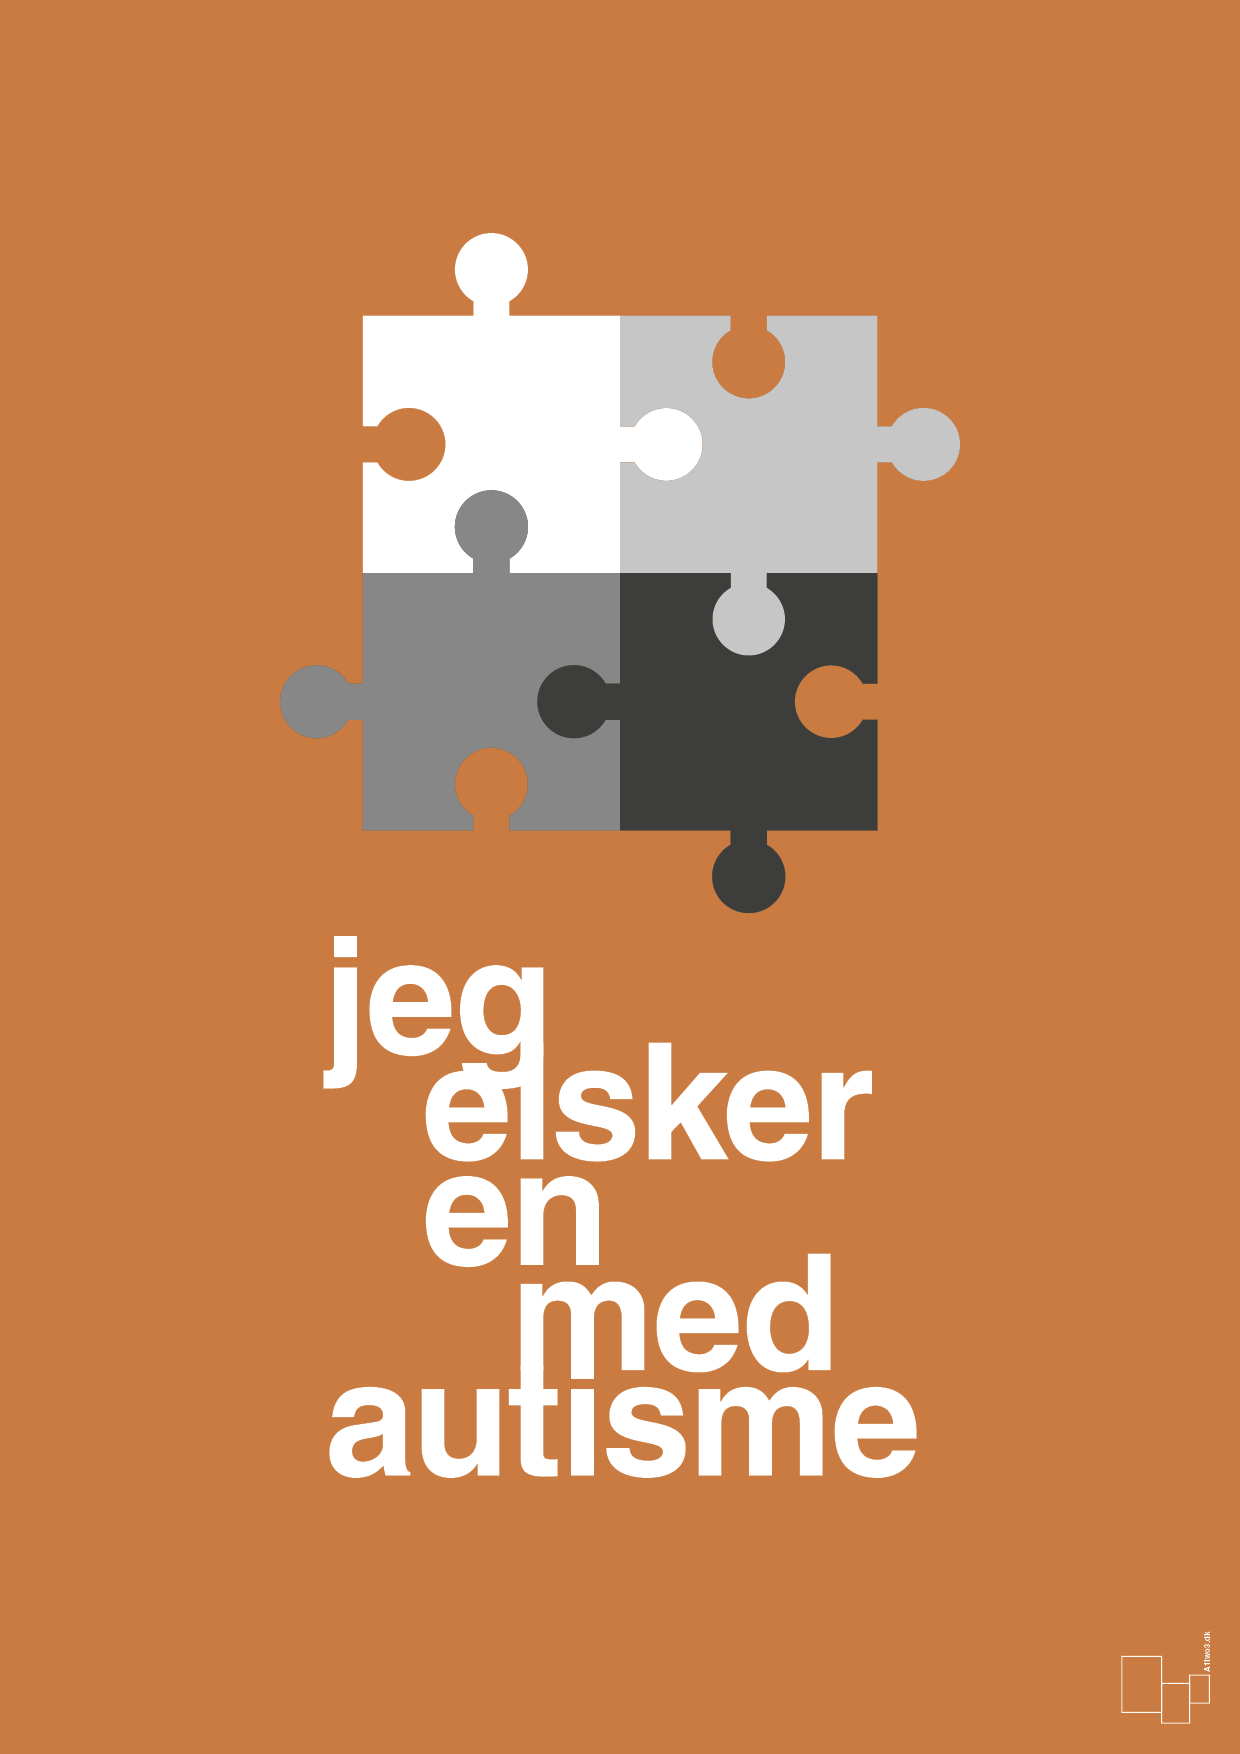 jeg elsker en med autisme - Plakat med Samfund i Rumba Orange